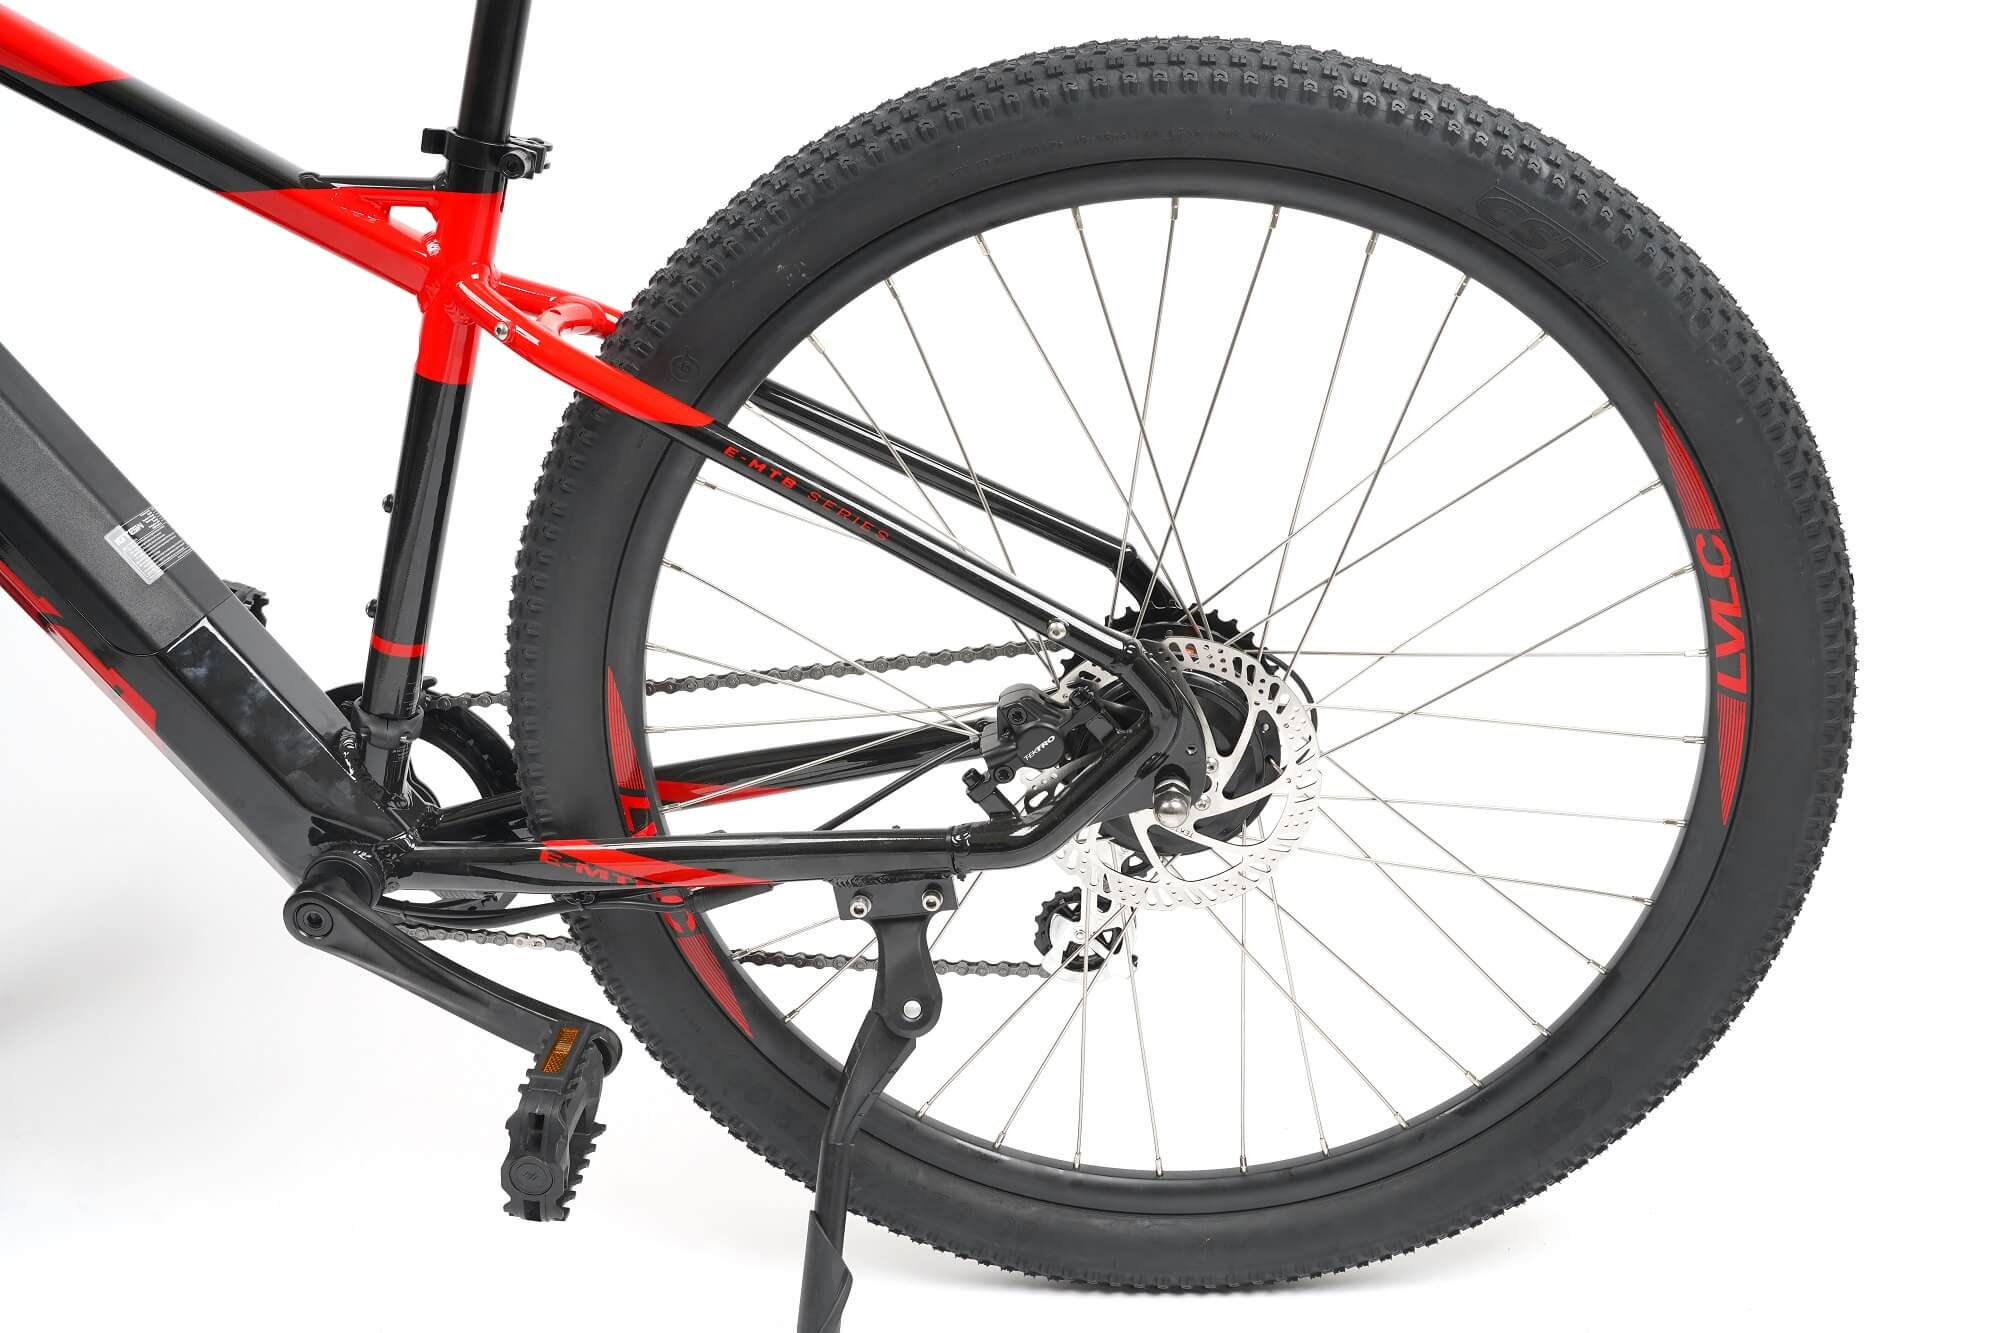 43,18 29 schwarz/rot) (Laufradgröße: Mountainbike cm, 540 B400347 LOVELEC Rahmenhöhe: Erwachsene-Rad, Zoll, Wh,